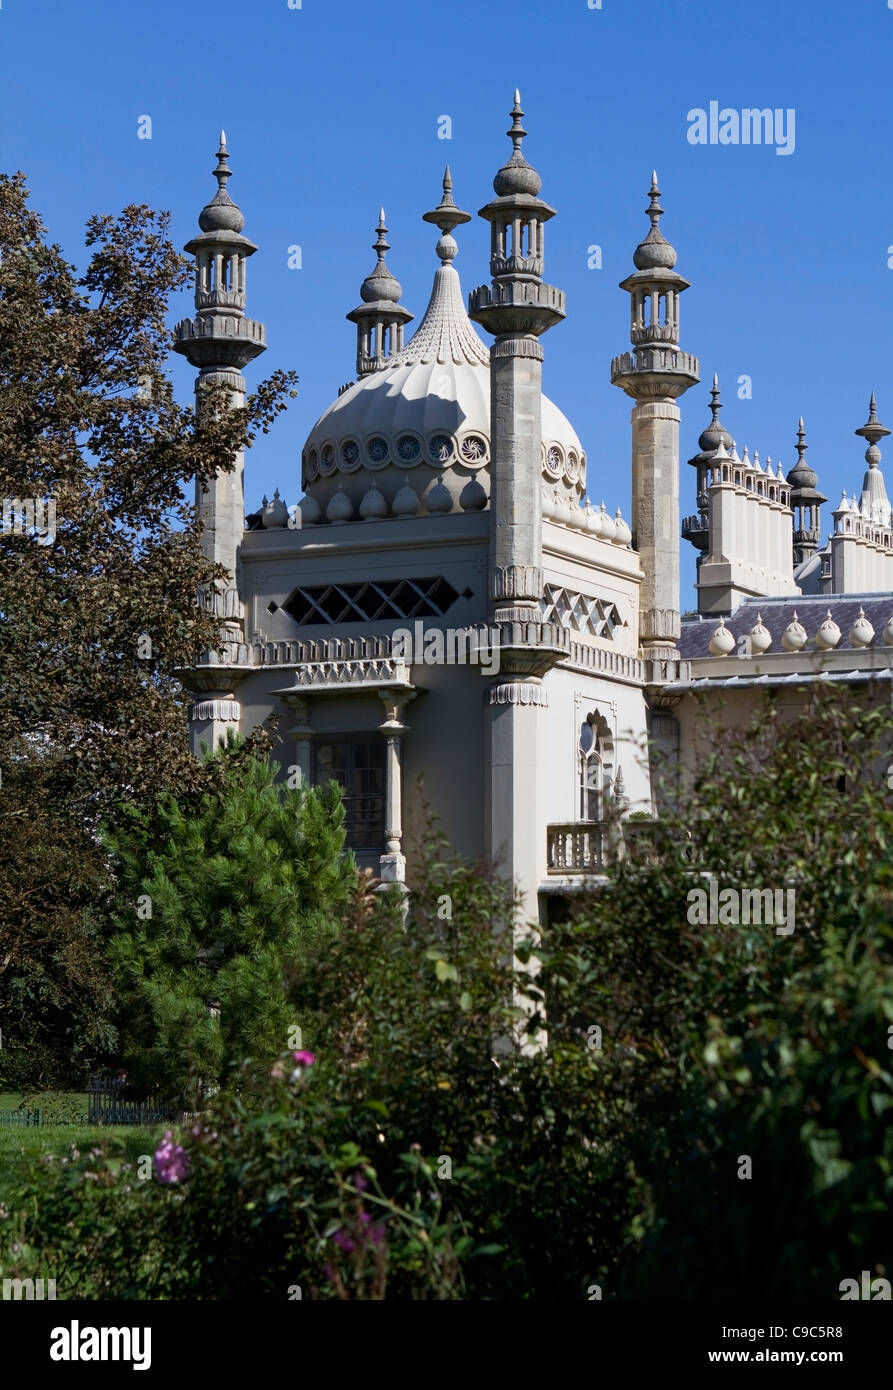 The Royal Pavilion in Brighton, England Stock Photo